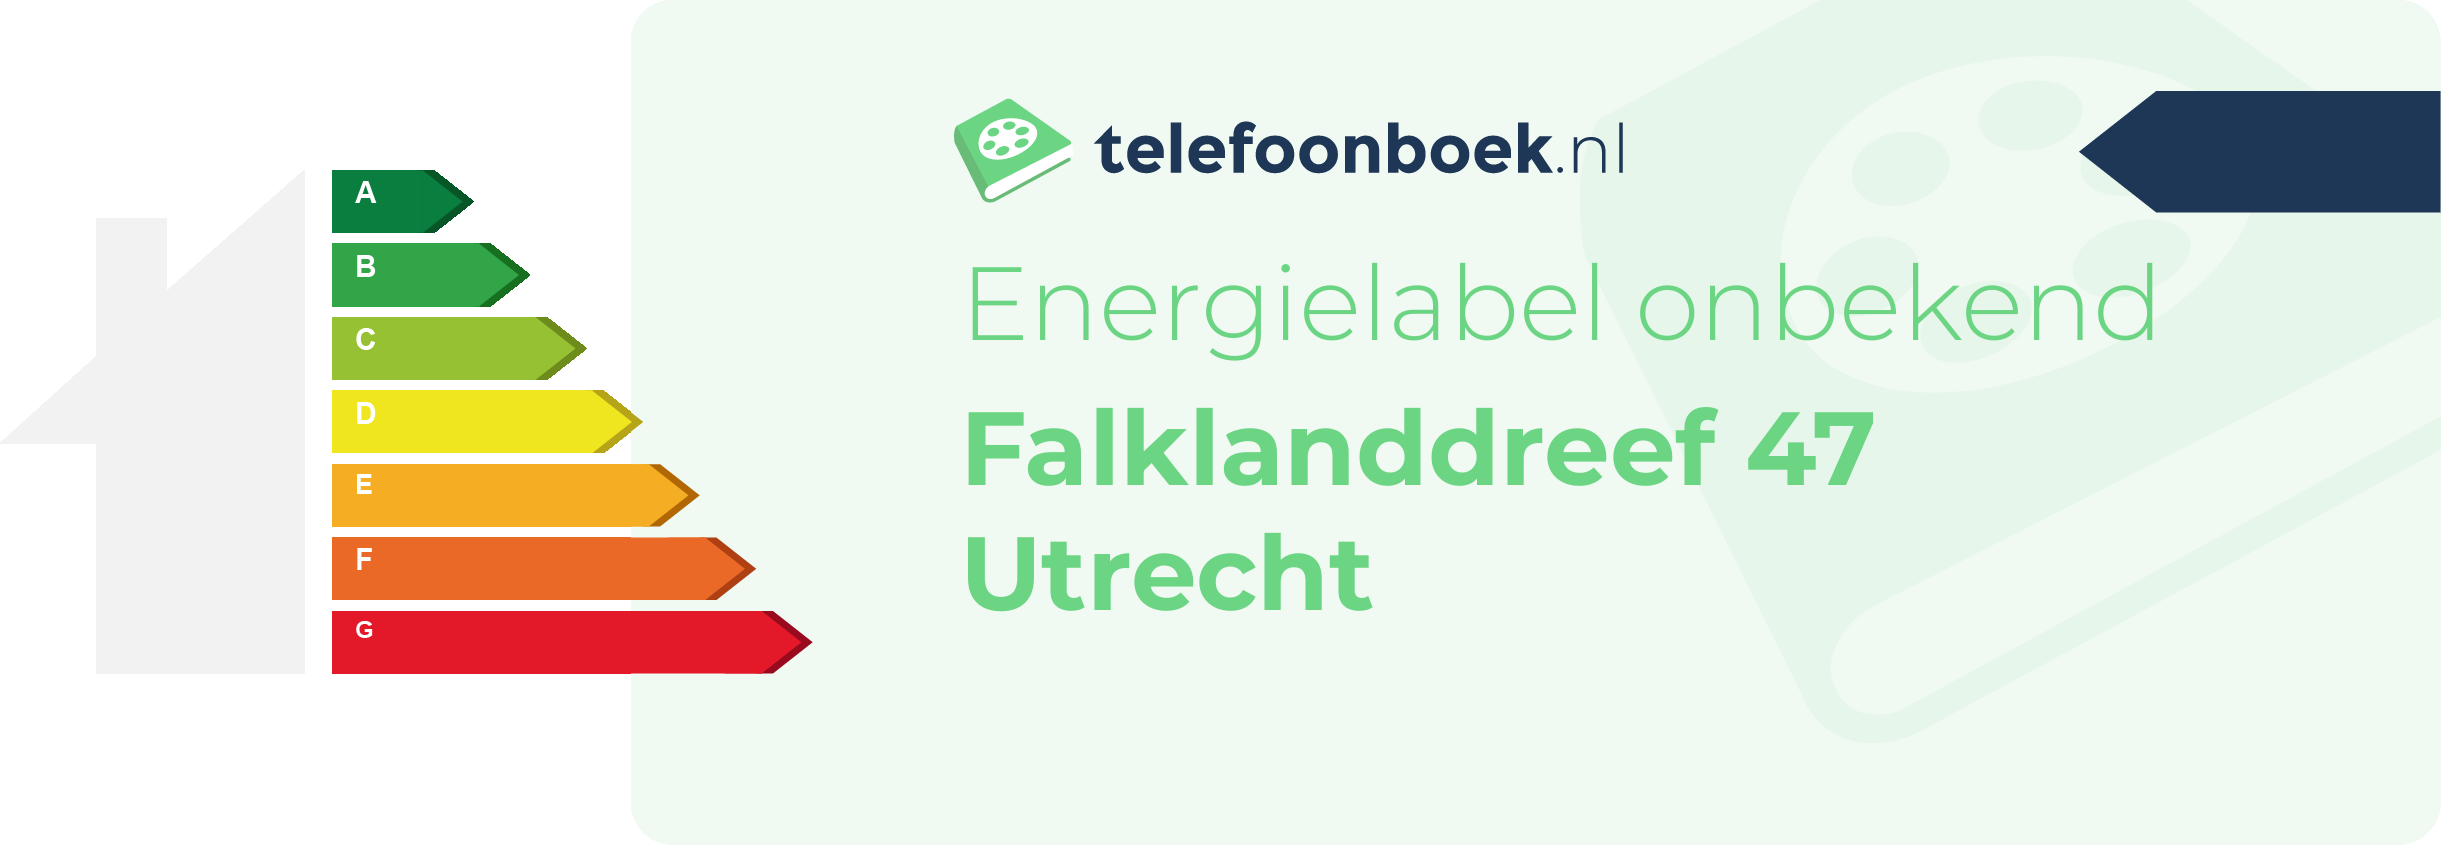 Energielabel Falklanddreef 47 Utrecht